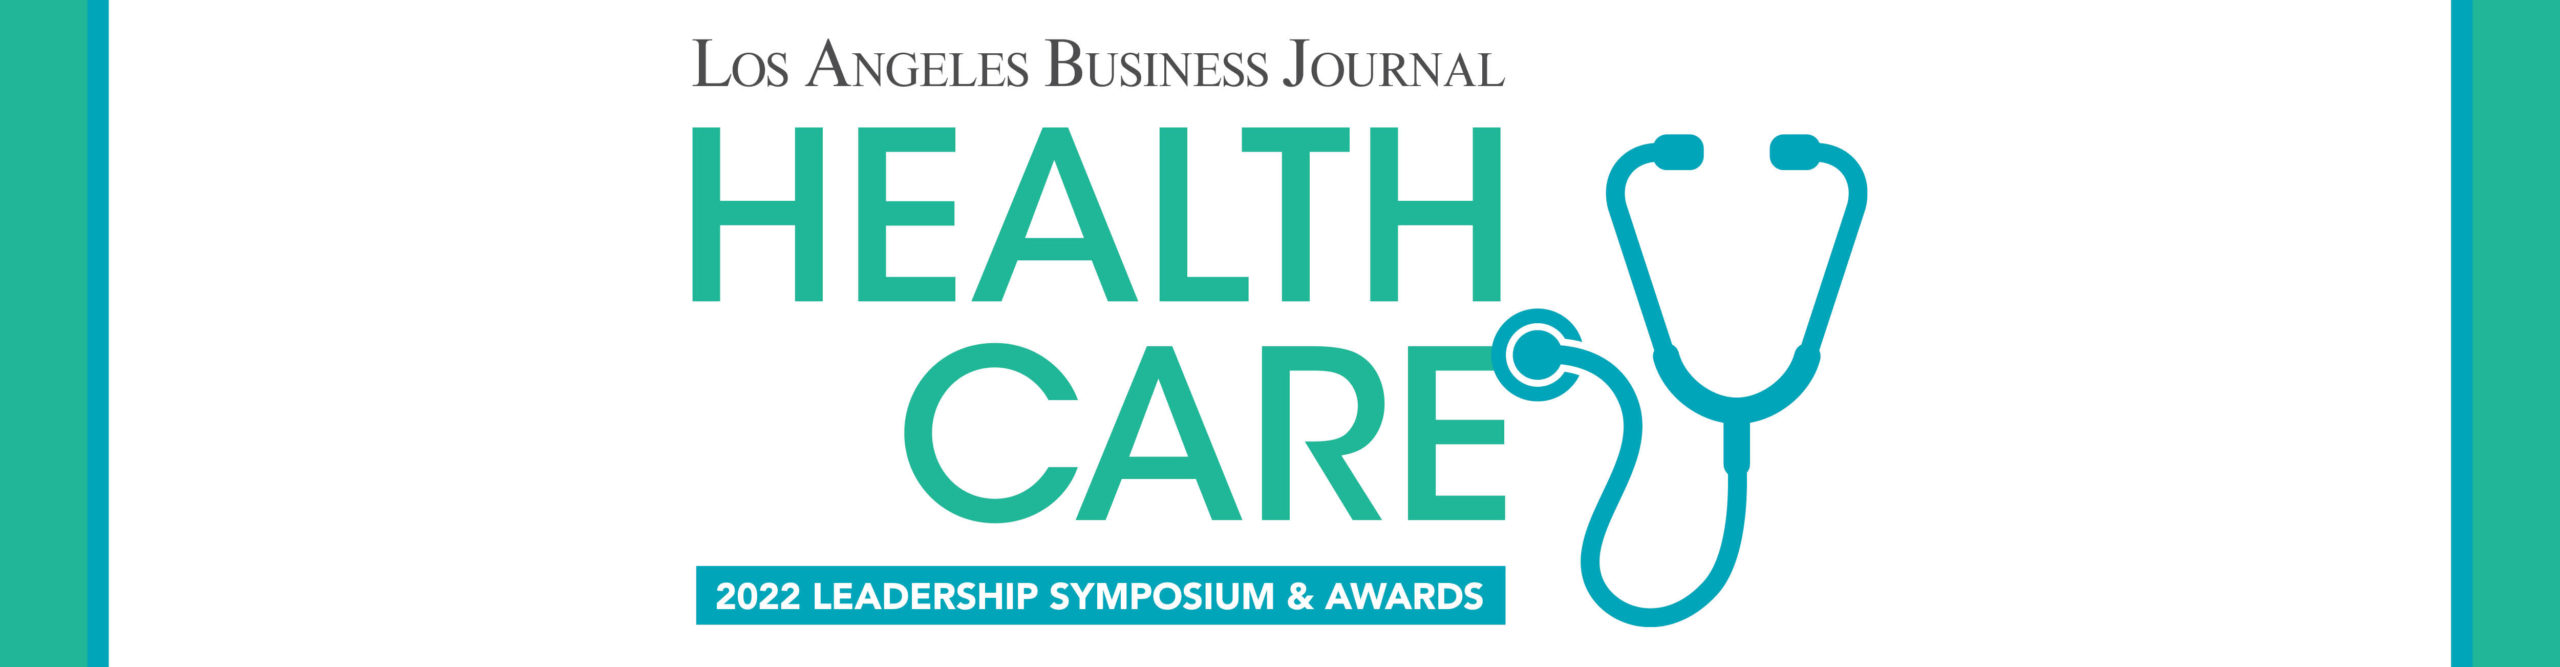 Health Care Leadership Symposium & Awards Event Banner